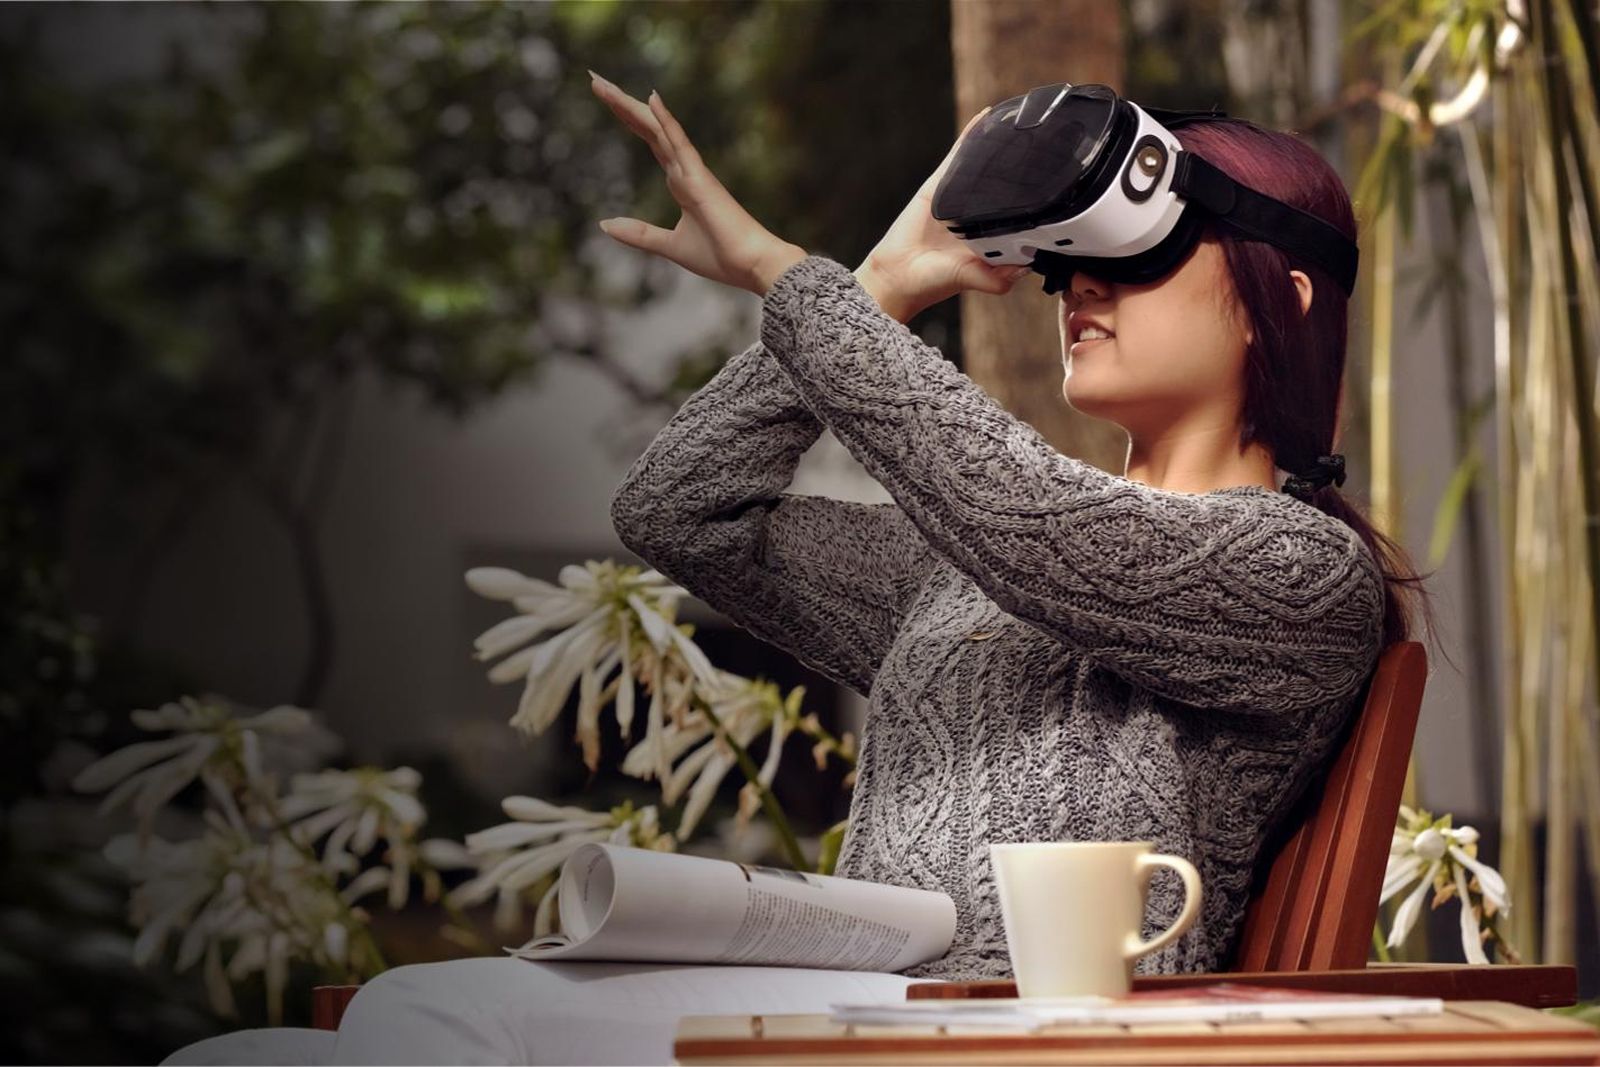 Qualcomm's tech is powering incredible virtual realities photo 2